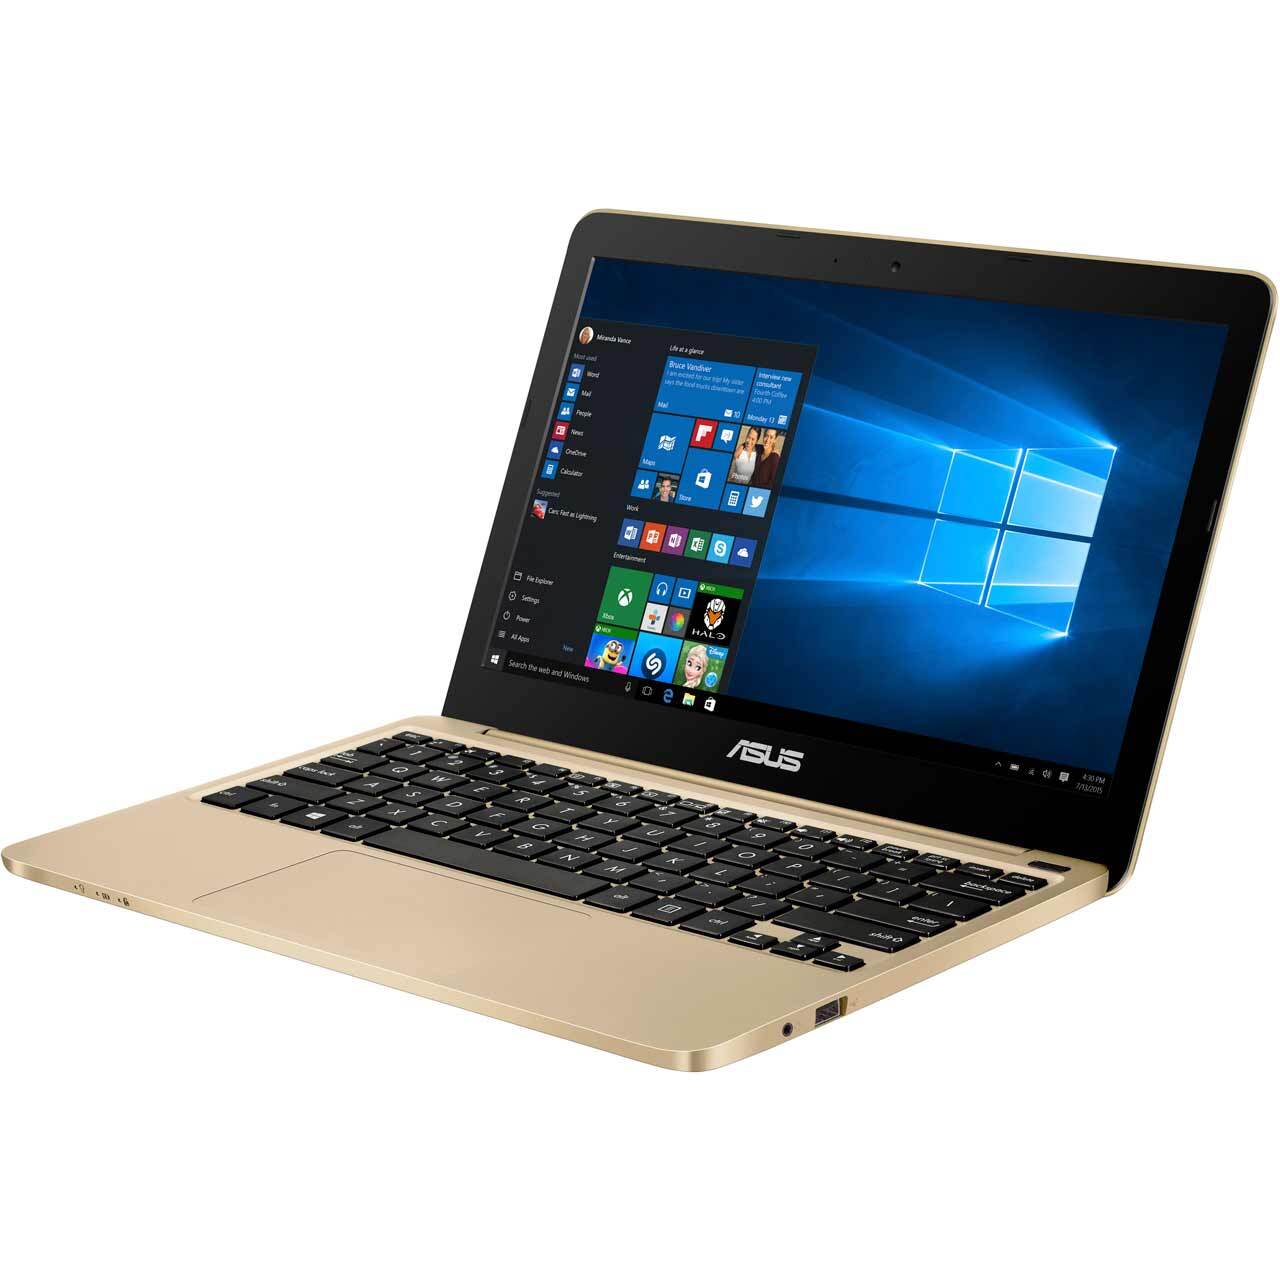 Laptop Asus E200HA-FD0043TS - Intel Atom X5 Z8350, 2GB RAM, VGA Intel HD Graphics 400, 11.6 inch